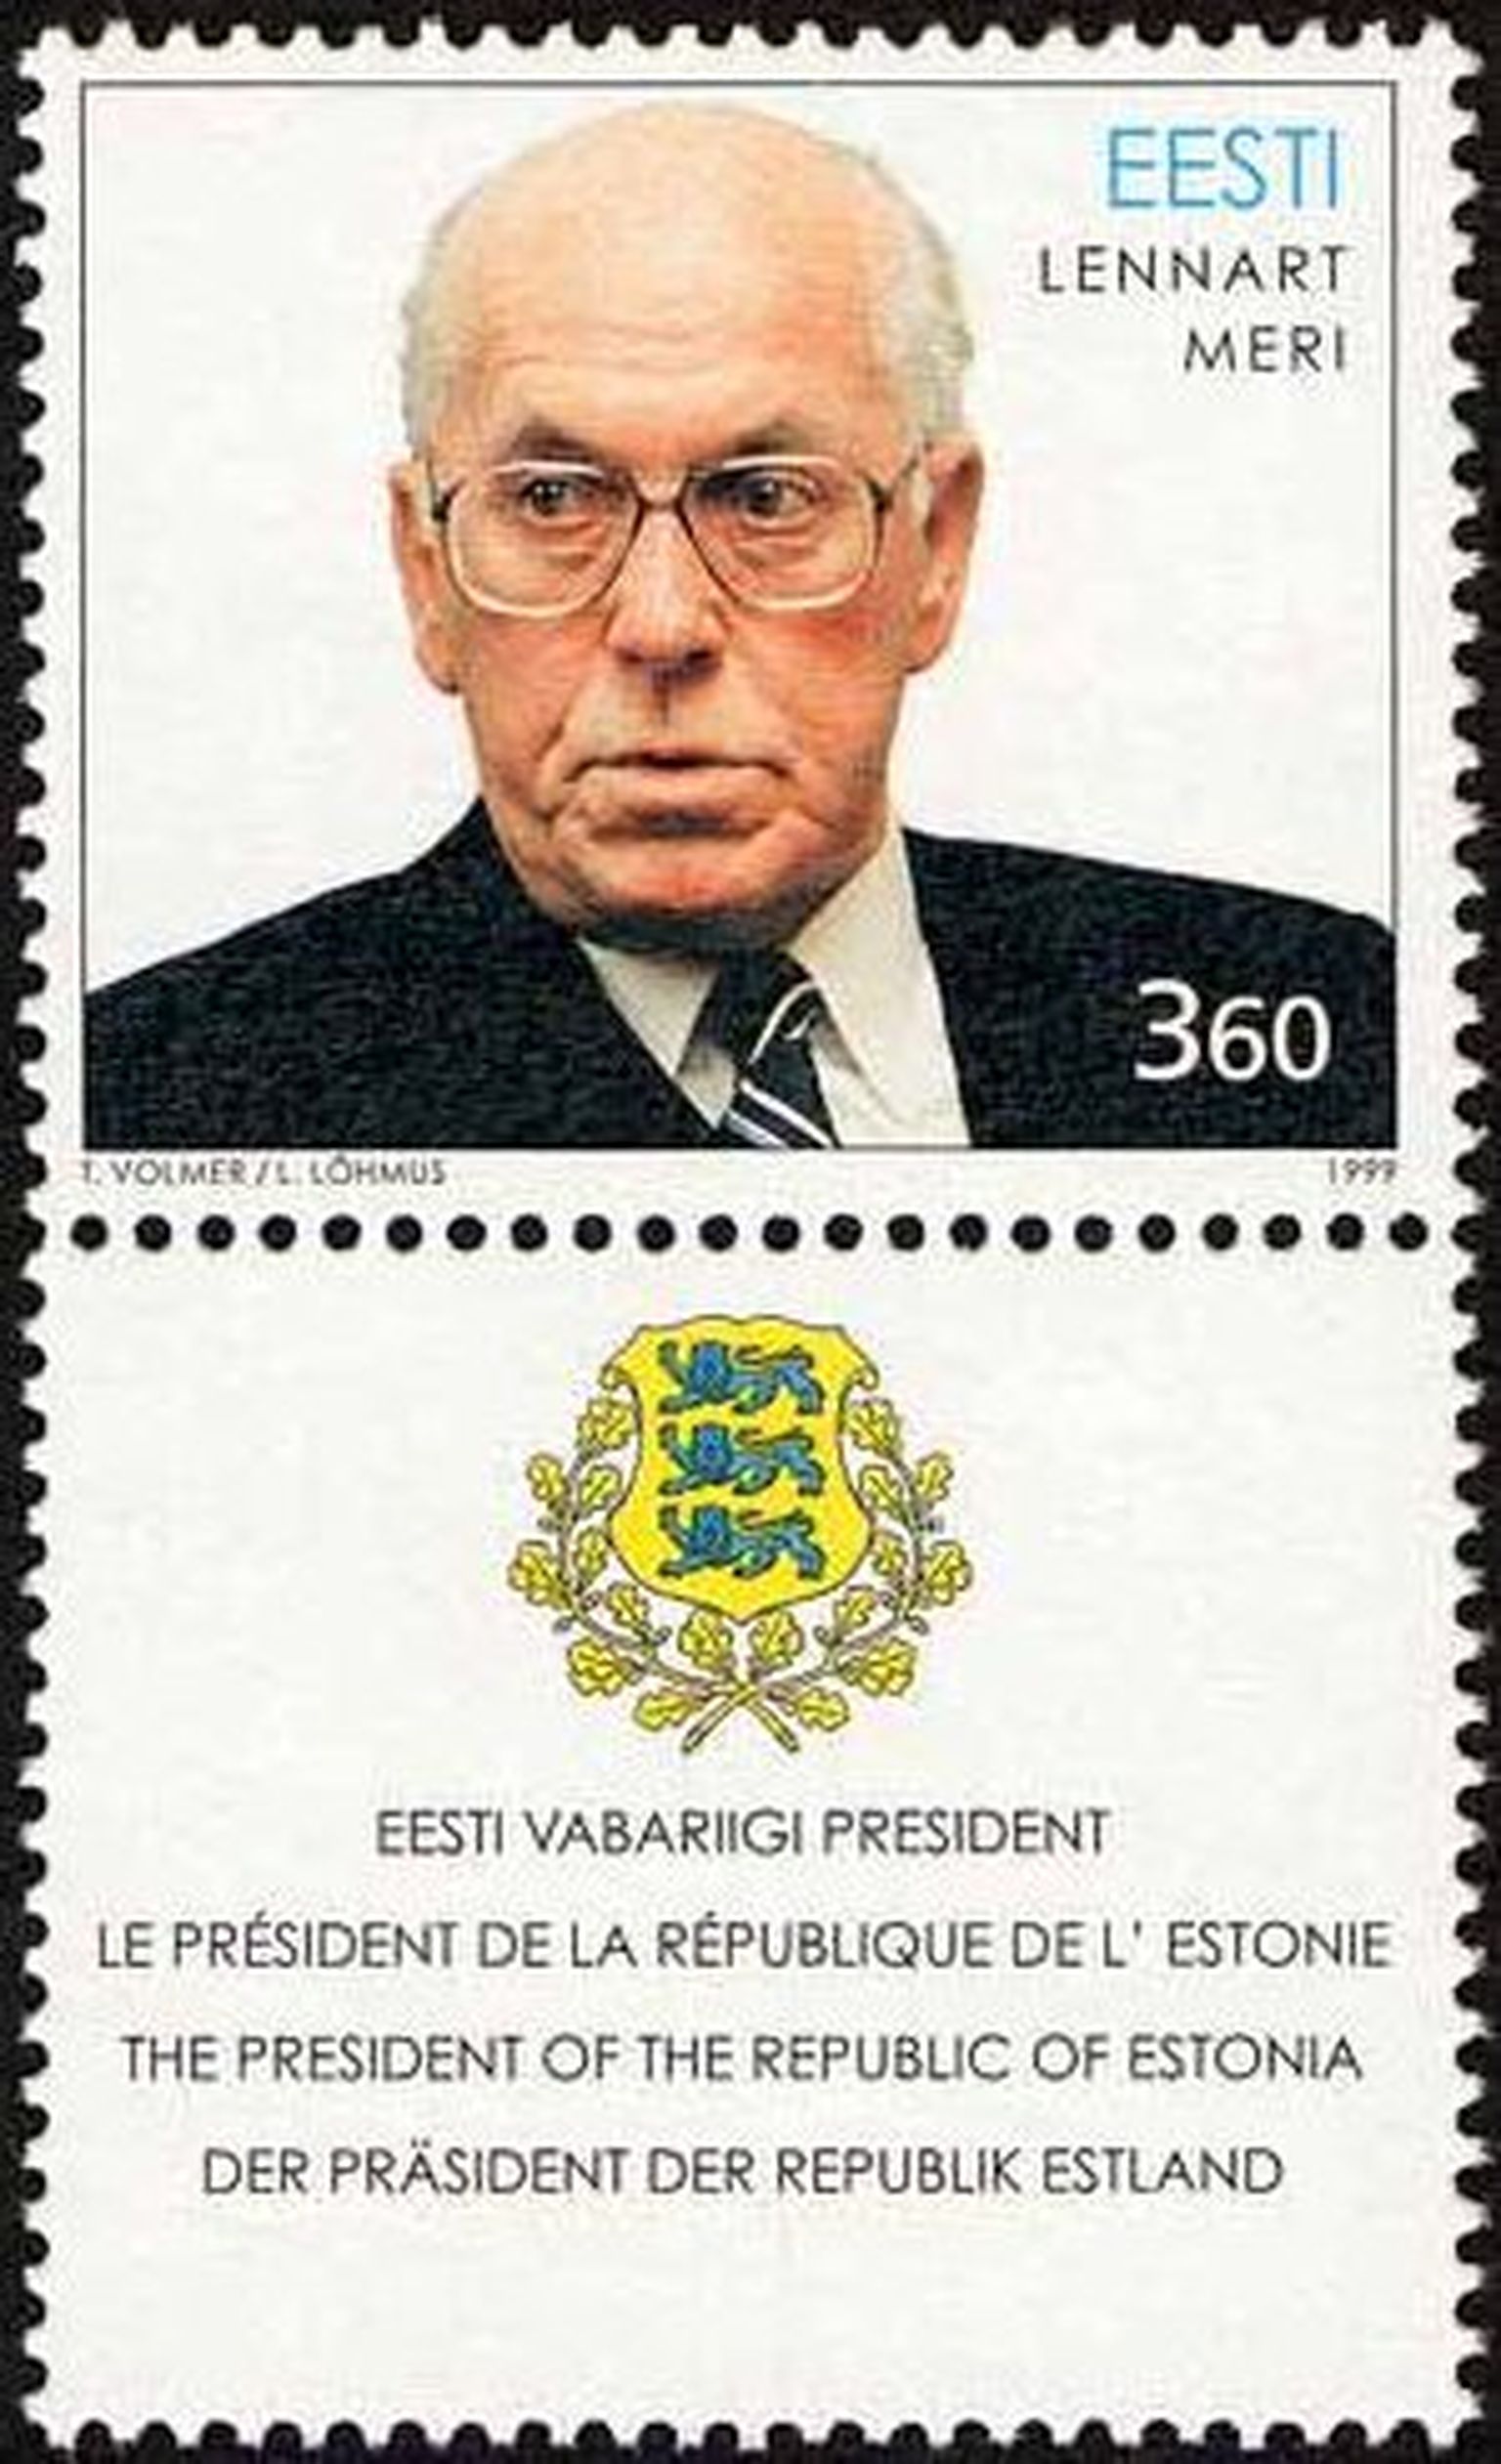 Lennart Meri postmark